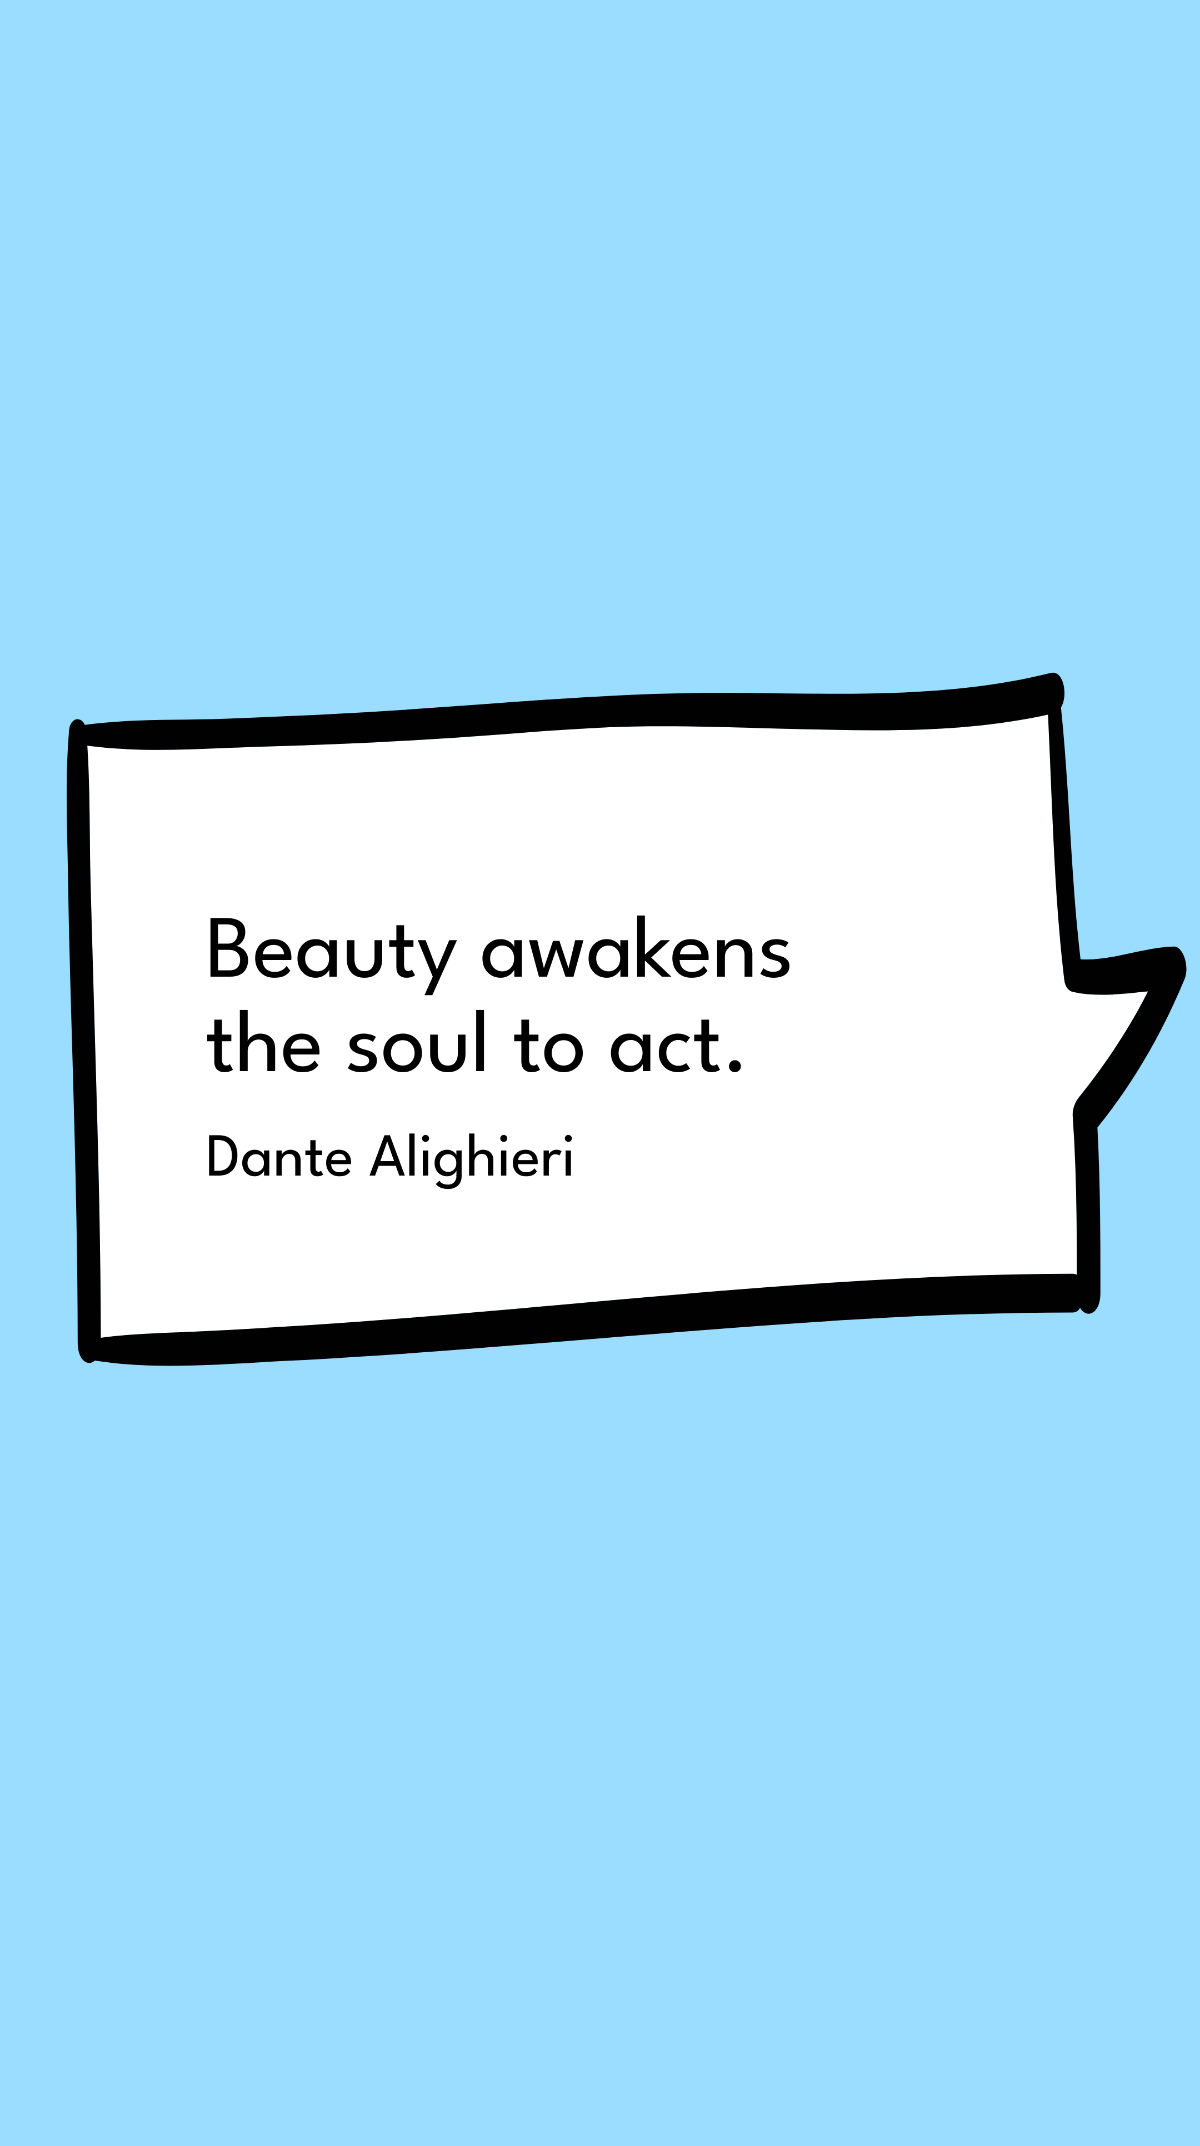 Dante Alighieri - Beauty awakens the soul to act. Template